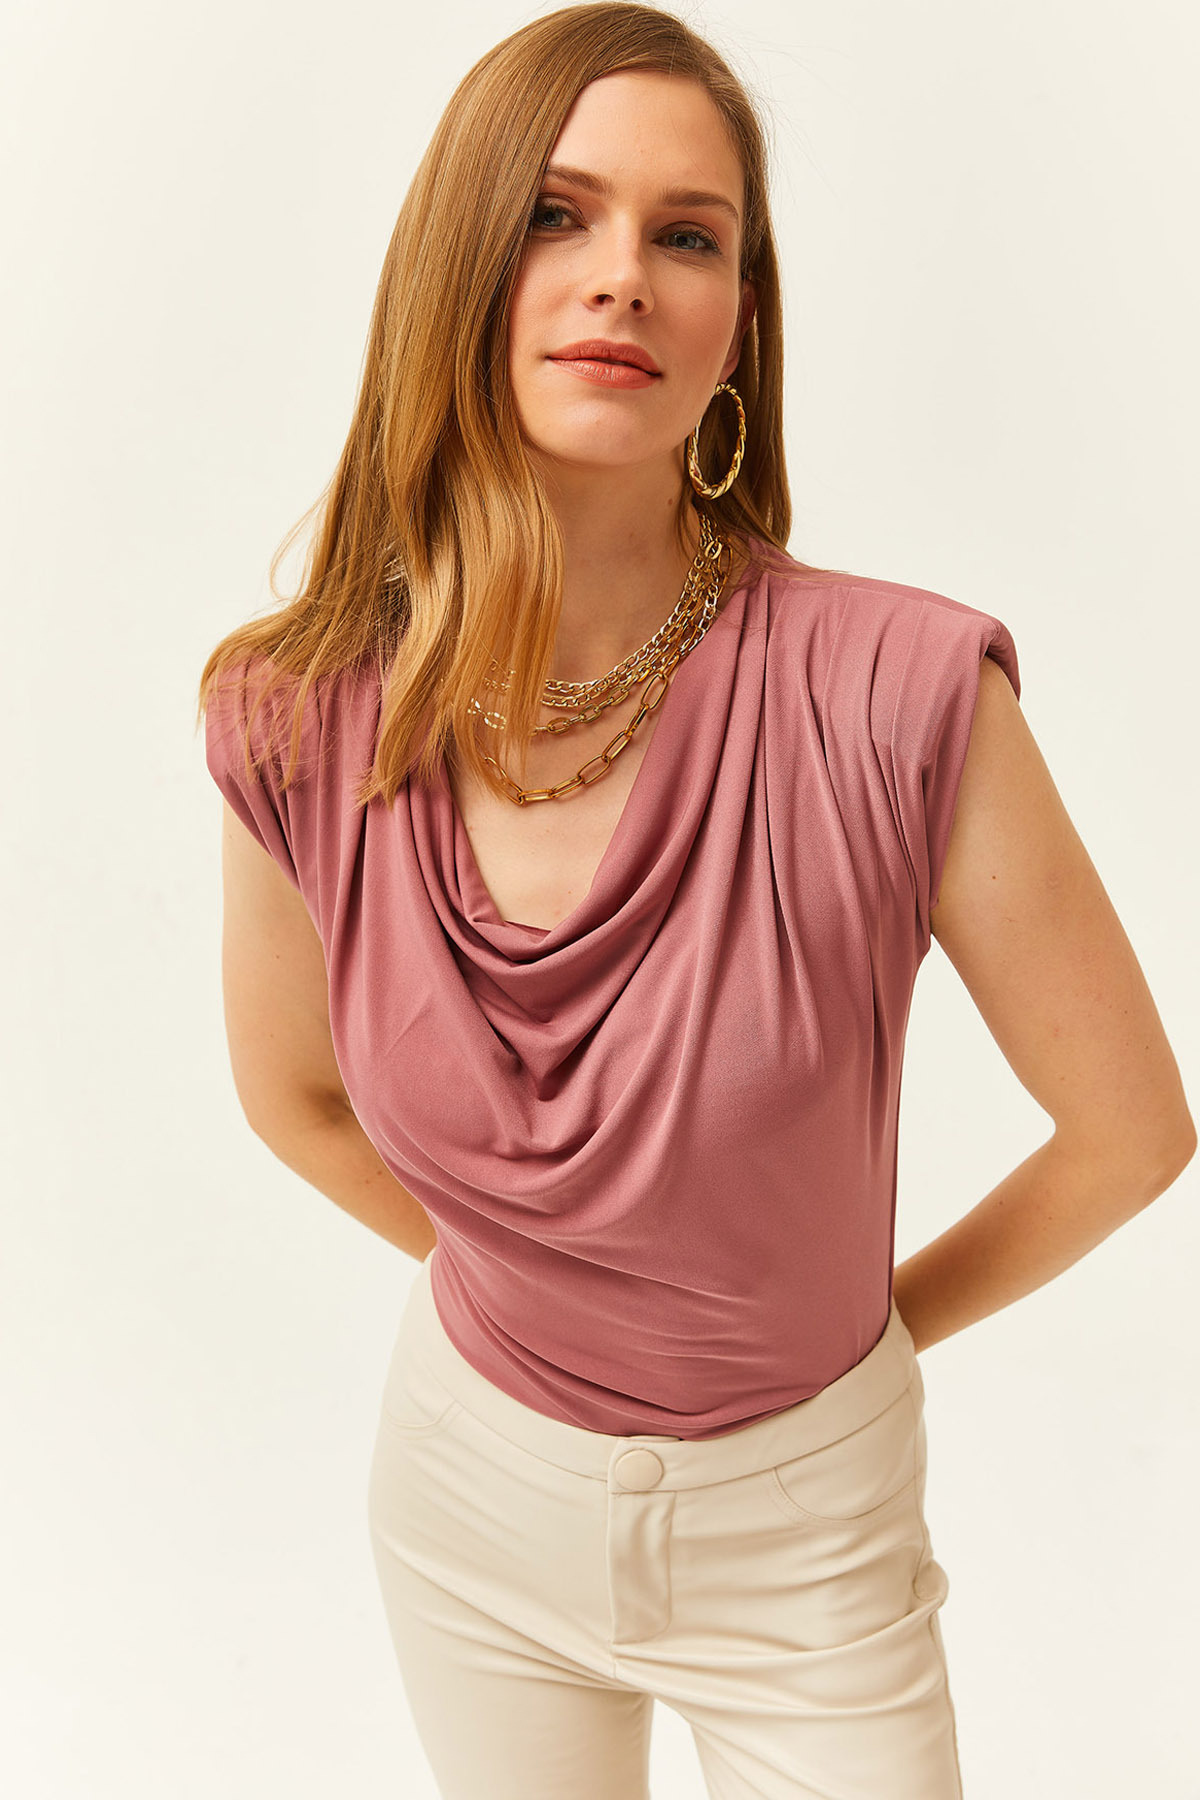 Olalook Women's Pale Pink Waistband Detail Collar Flowy Blouse